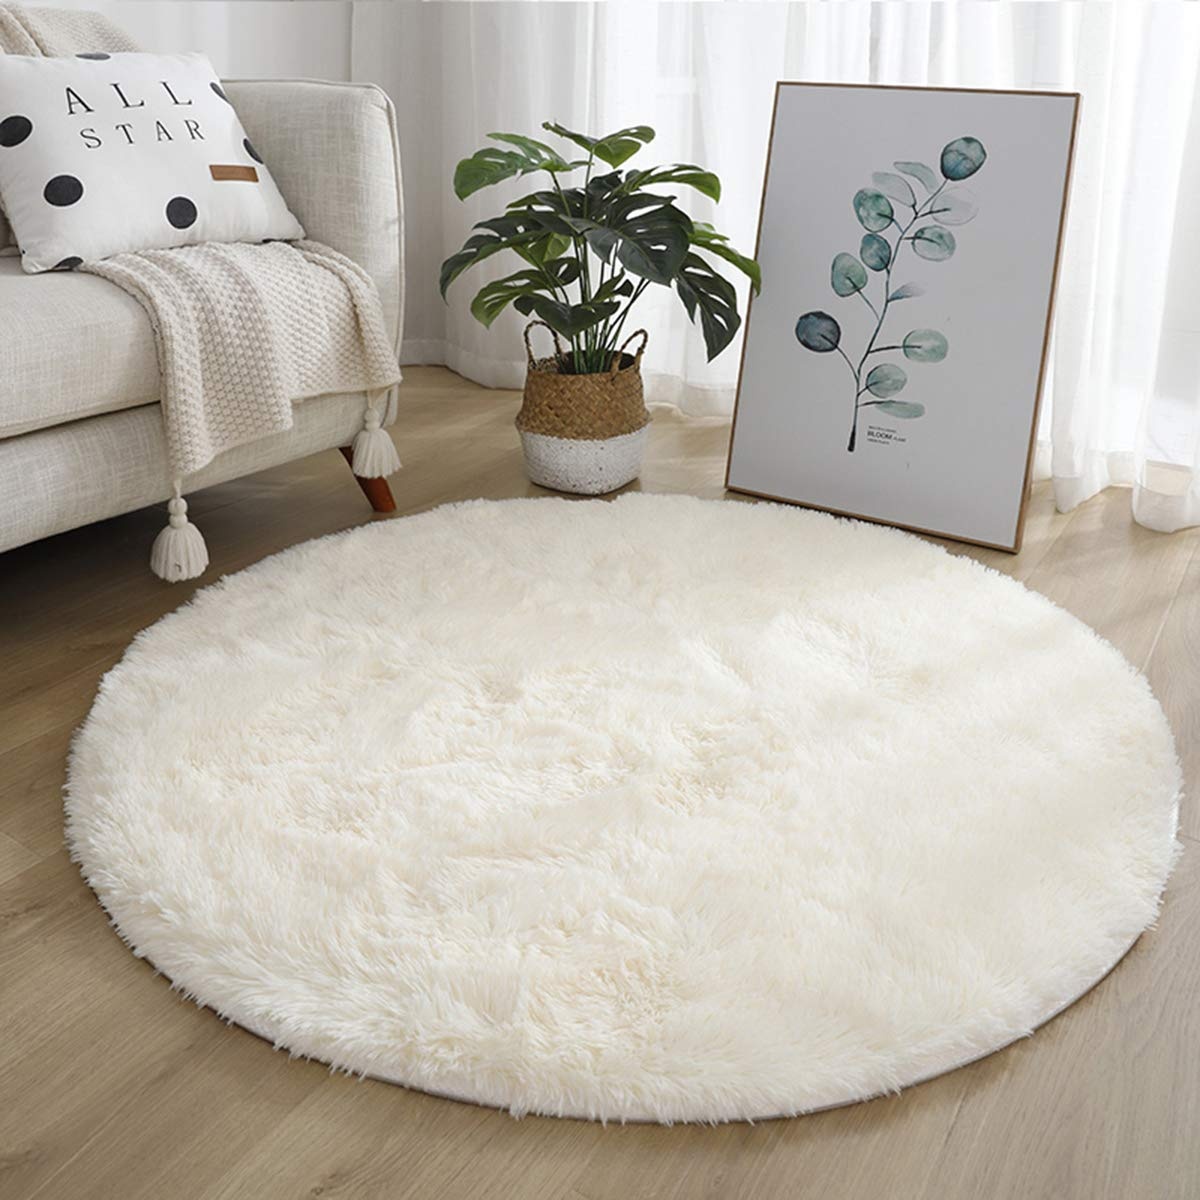 Leesentec Area Rugs Round Bedroom Carpets Living Room Anti Slip Soft Fluffy Rug Shaggy Floor Mats Large for Hallway (White, 160cm)